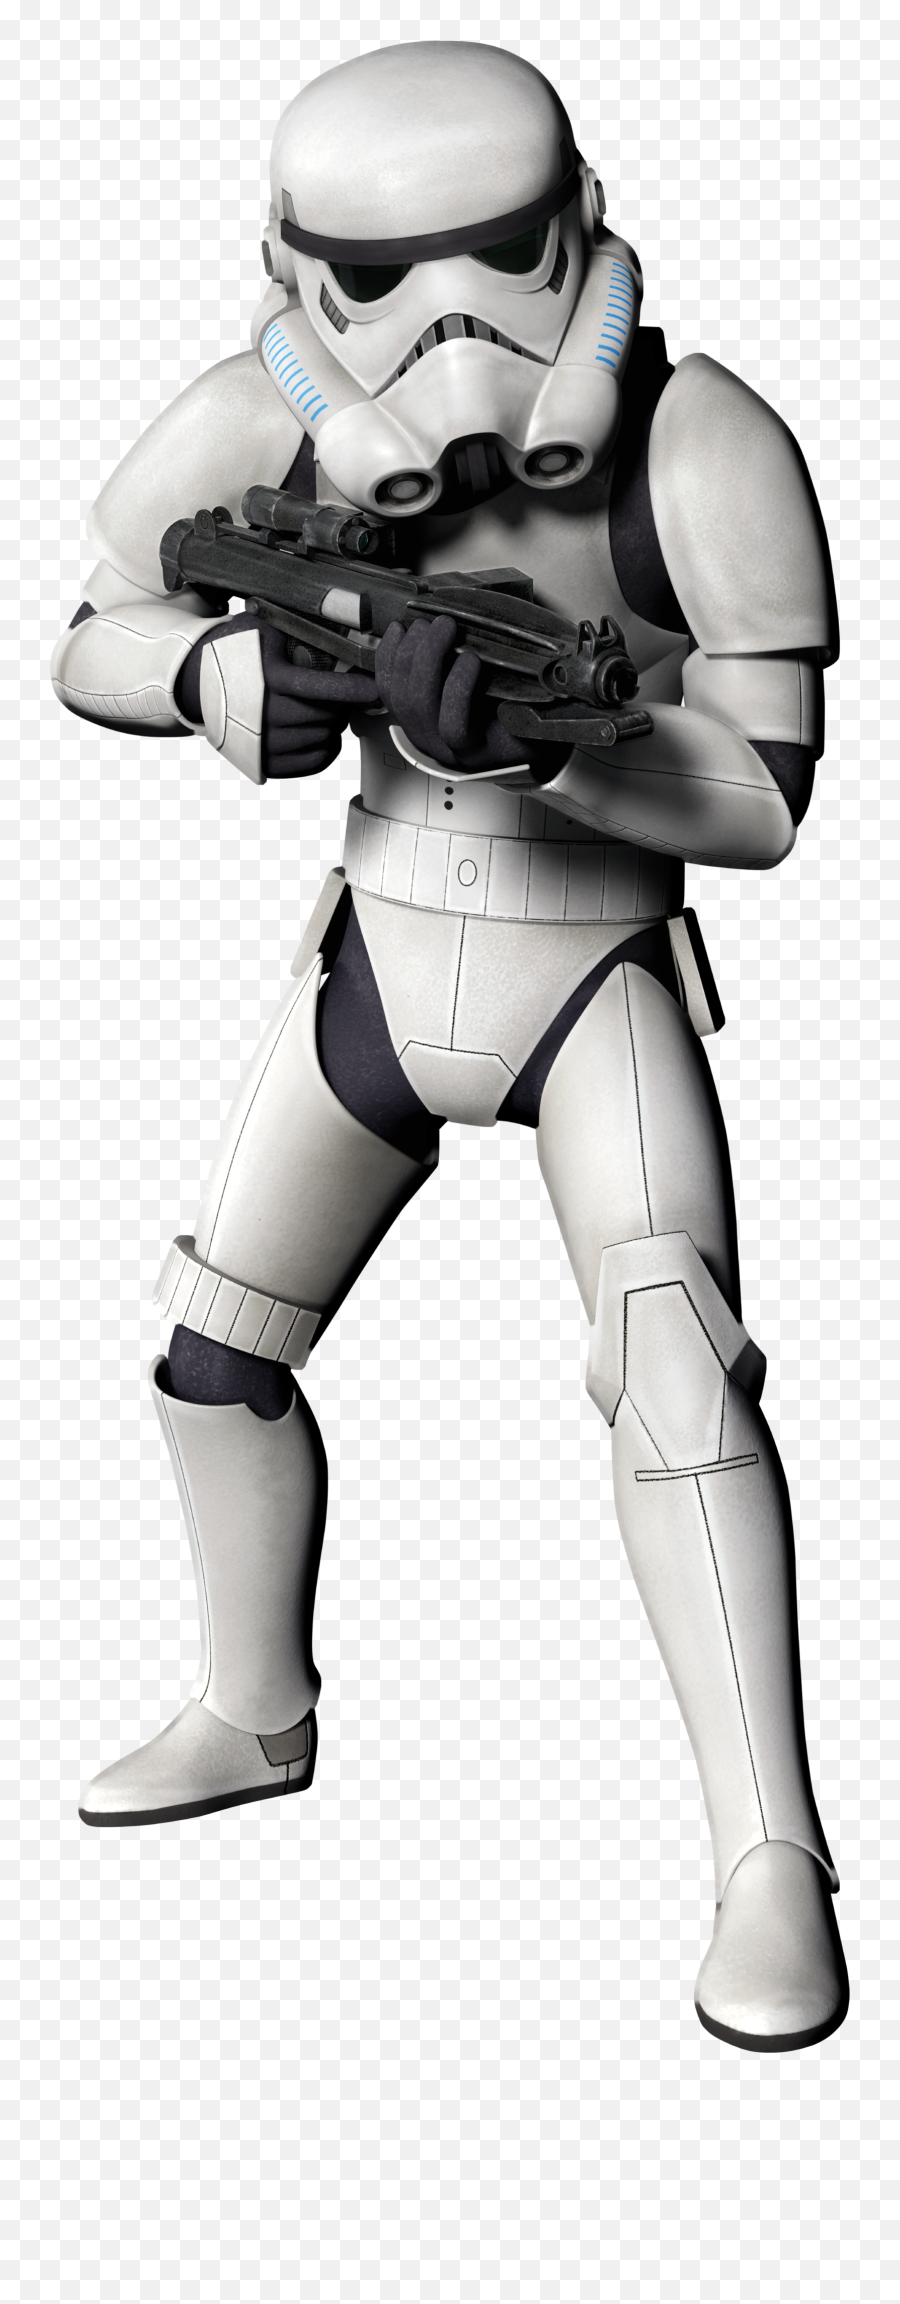 Stormtrooper - Stormtrooper Star Wars Rebles Emoji,